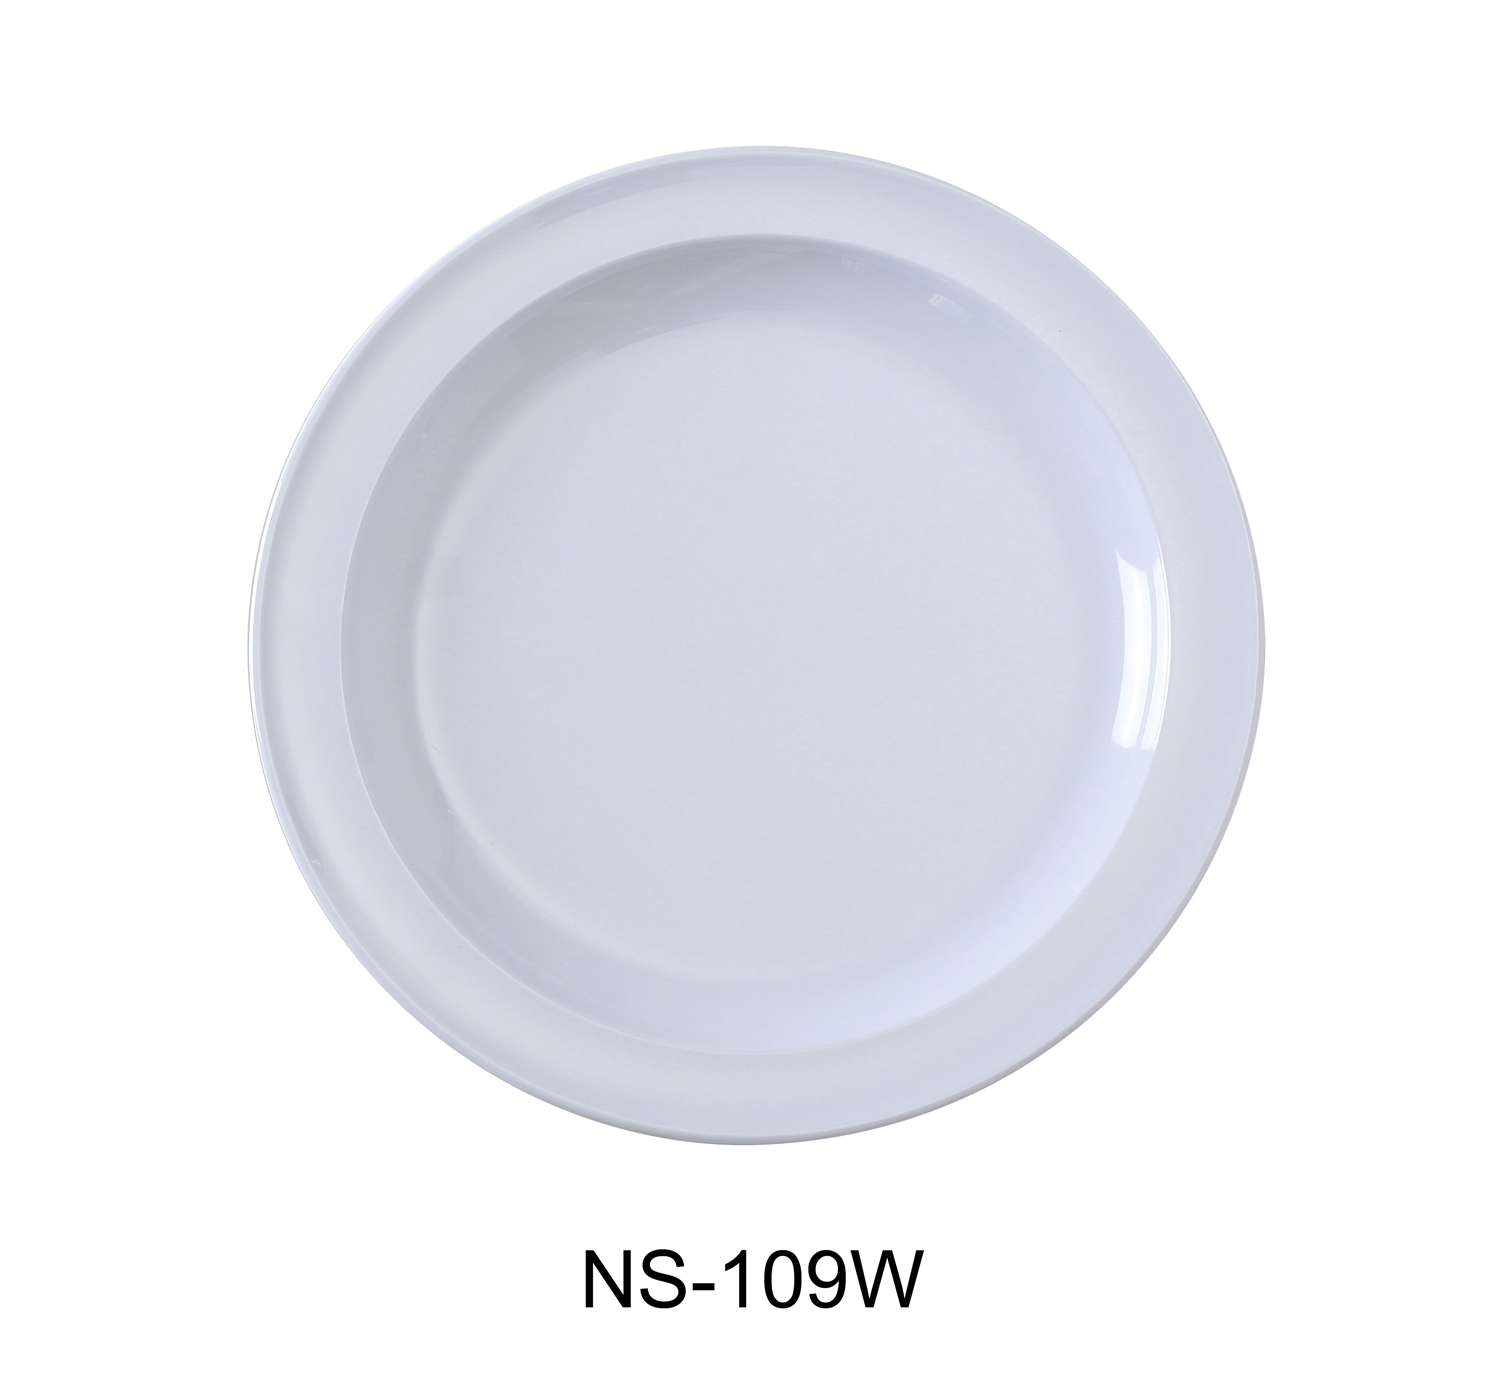 Yanco NS-109W Nessico Round Dinner Plate, 9" Diameter, Melamine, White Color - by Celebrate Festival Inc